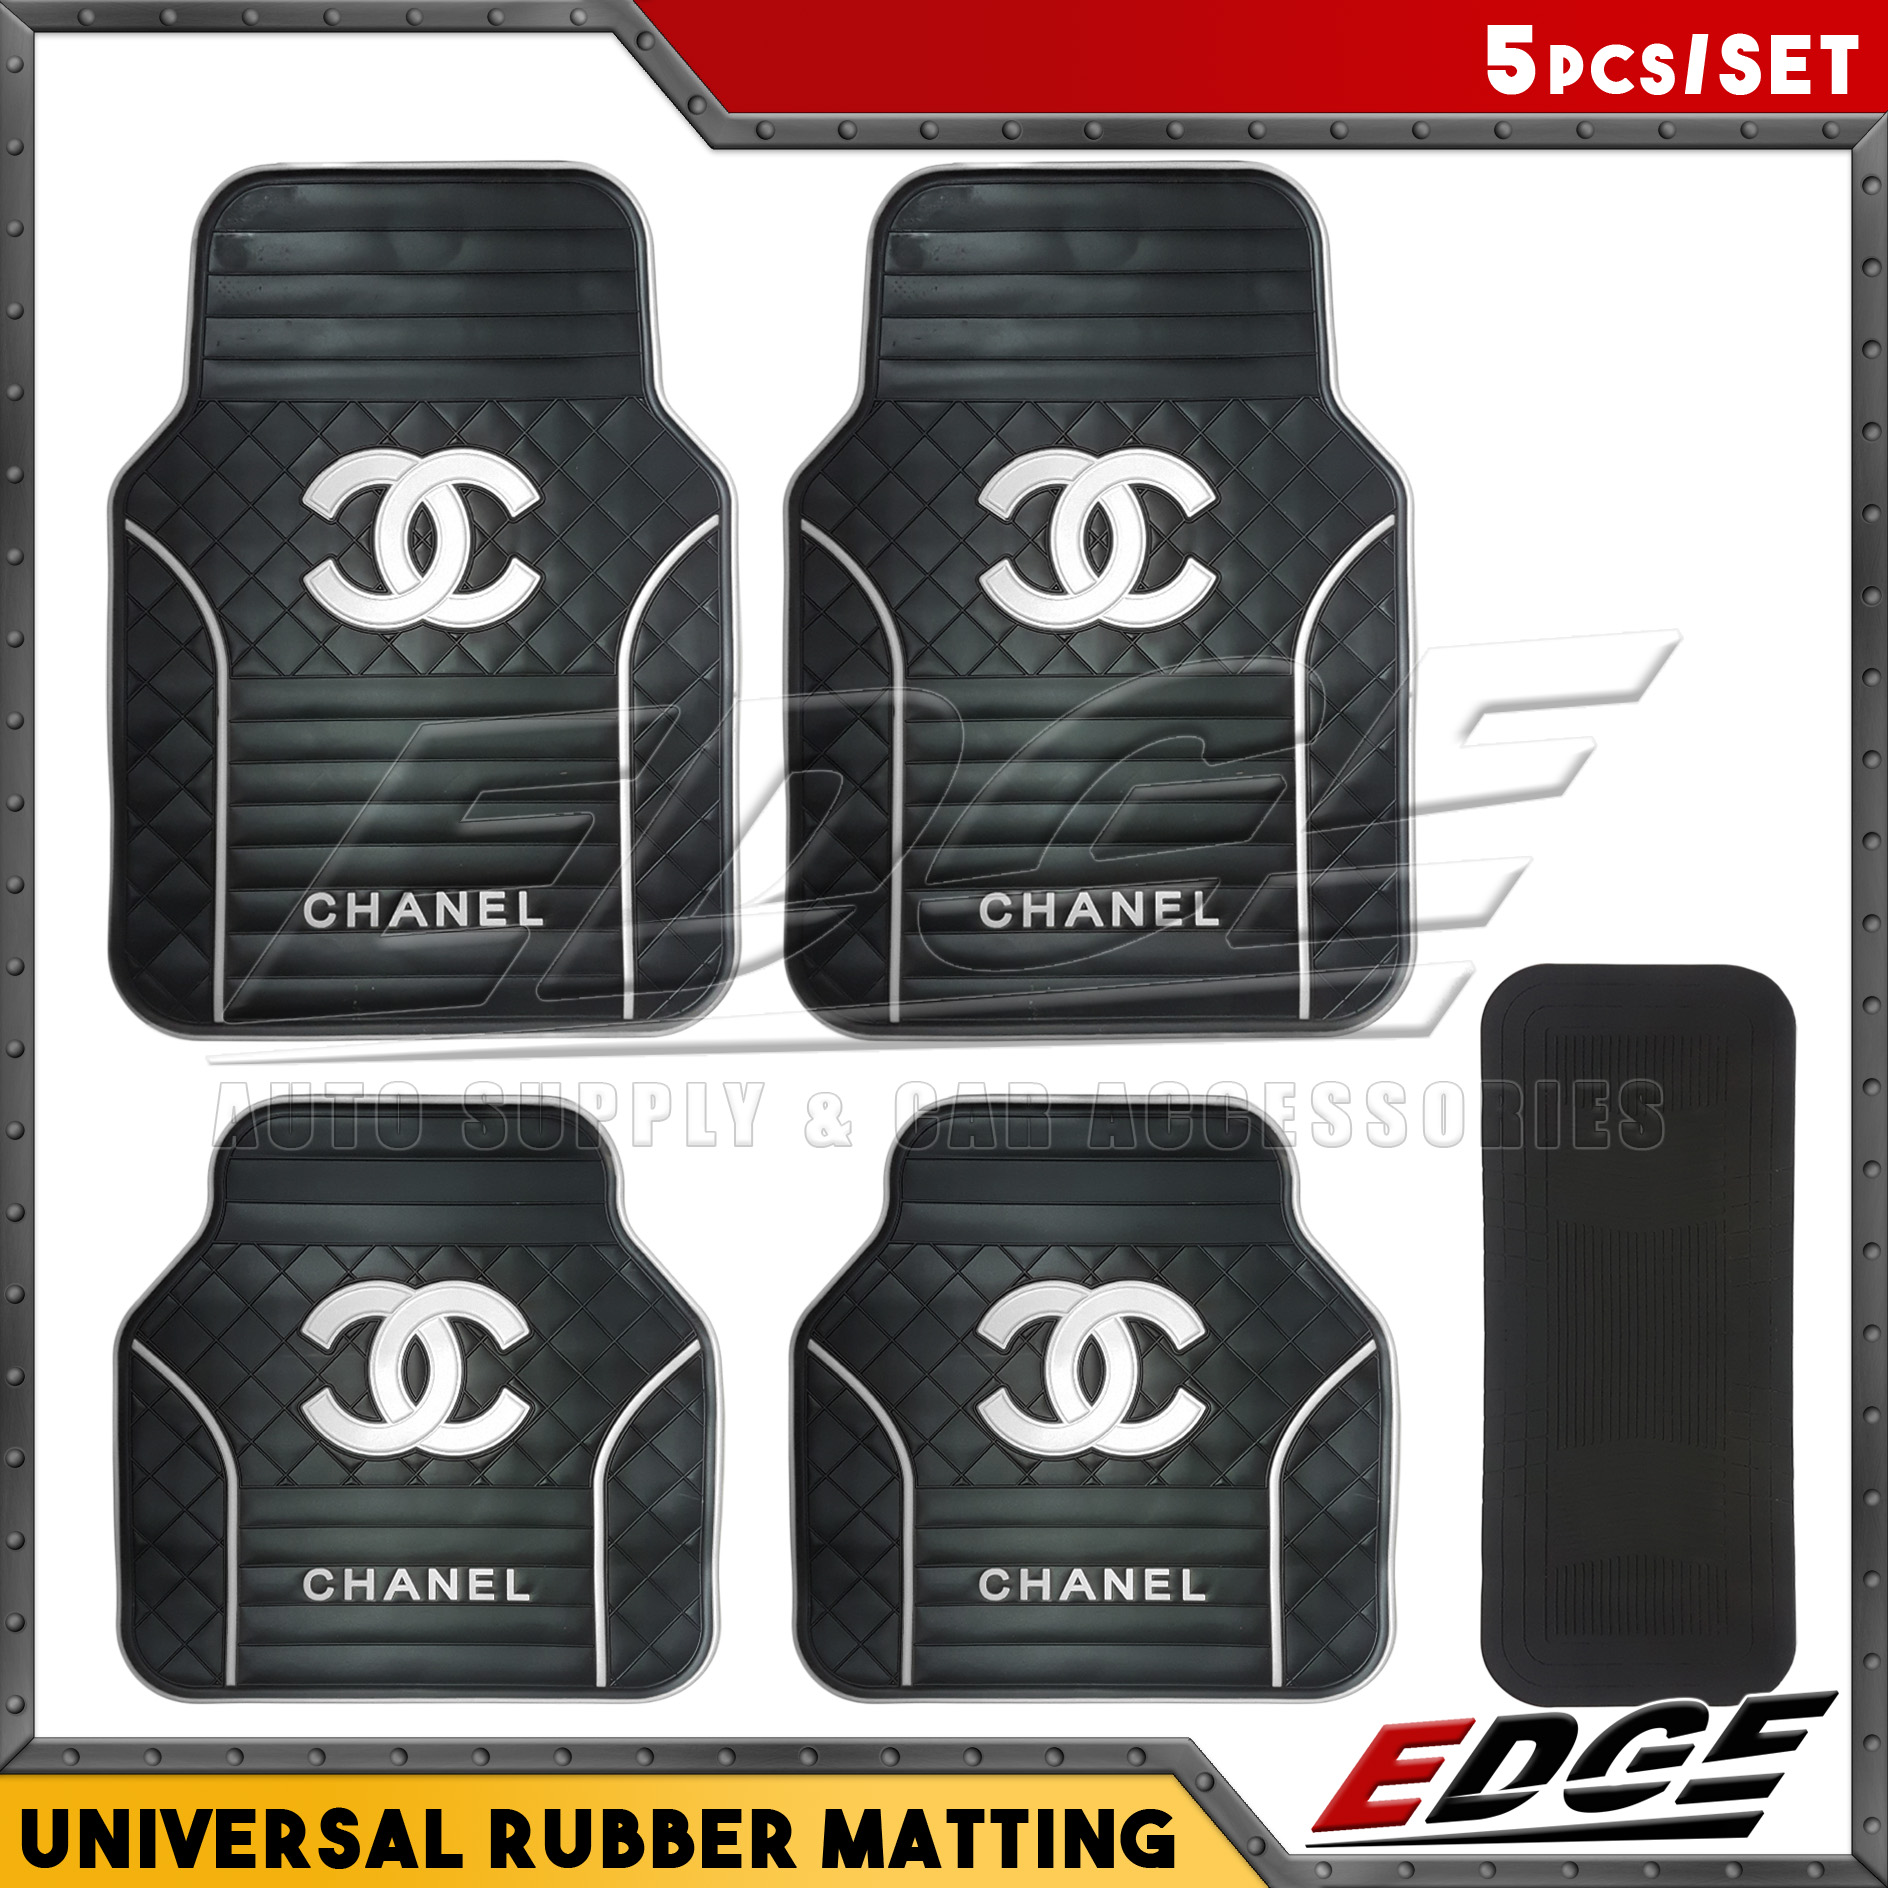 Universal Rubber Matting - LV - 5pcs/set // 5in1 car mat lv